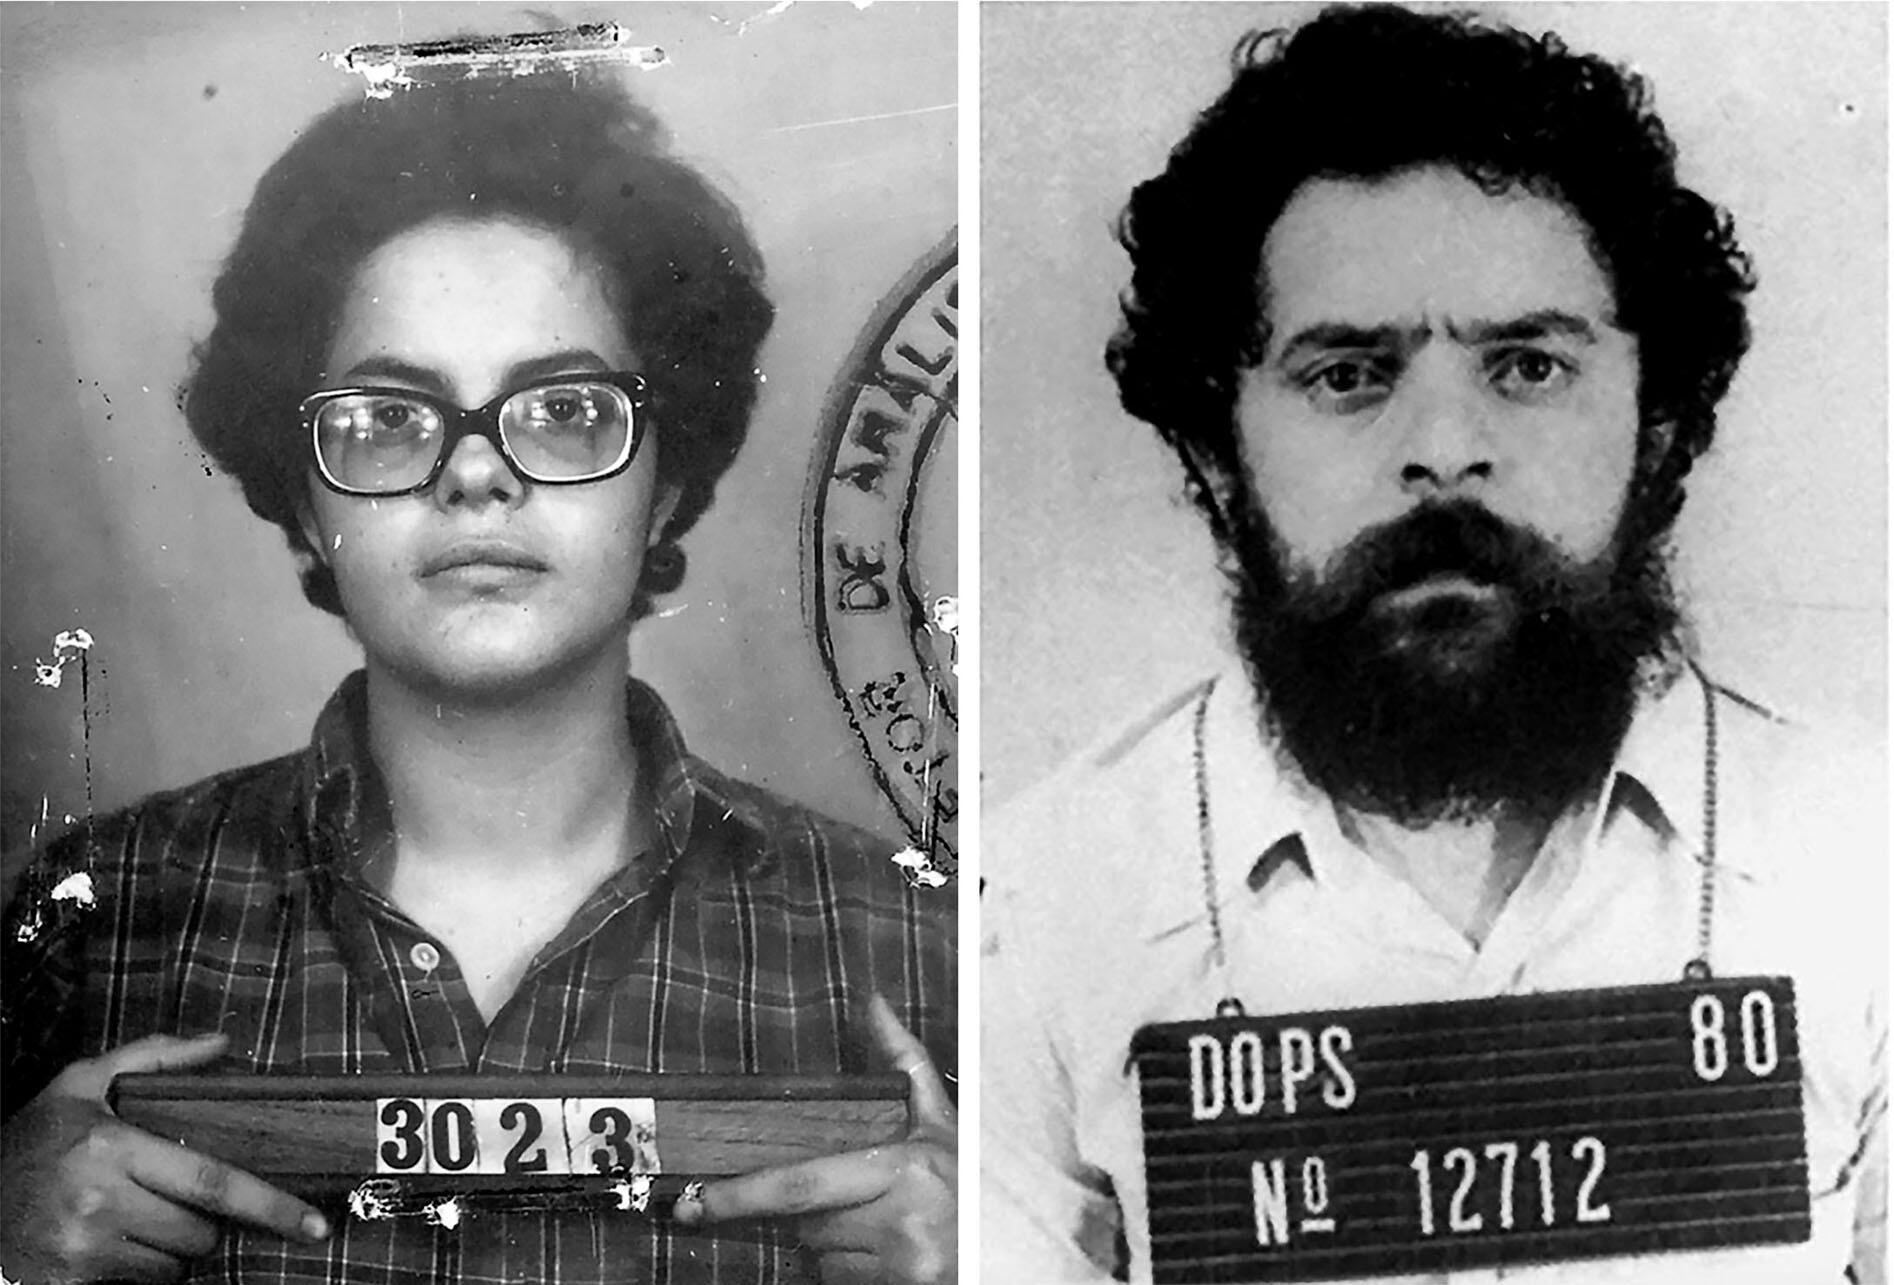 Booking photos of Dilma Rousseff (1970) and Luiz Inácio “Lula” da Silva (1980), from their imprisonment during Brazil’s dictatorship. (Photos courtesy of Elizabeth McKenna.)